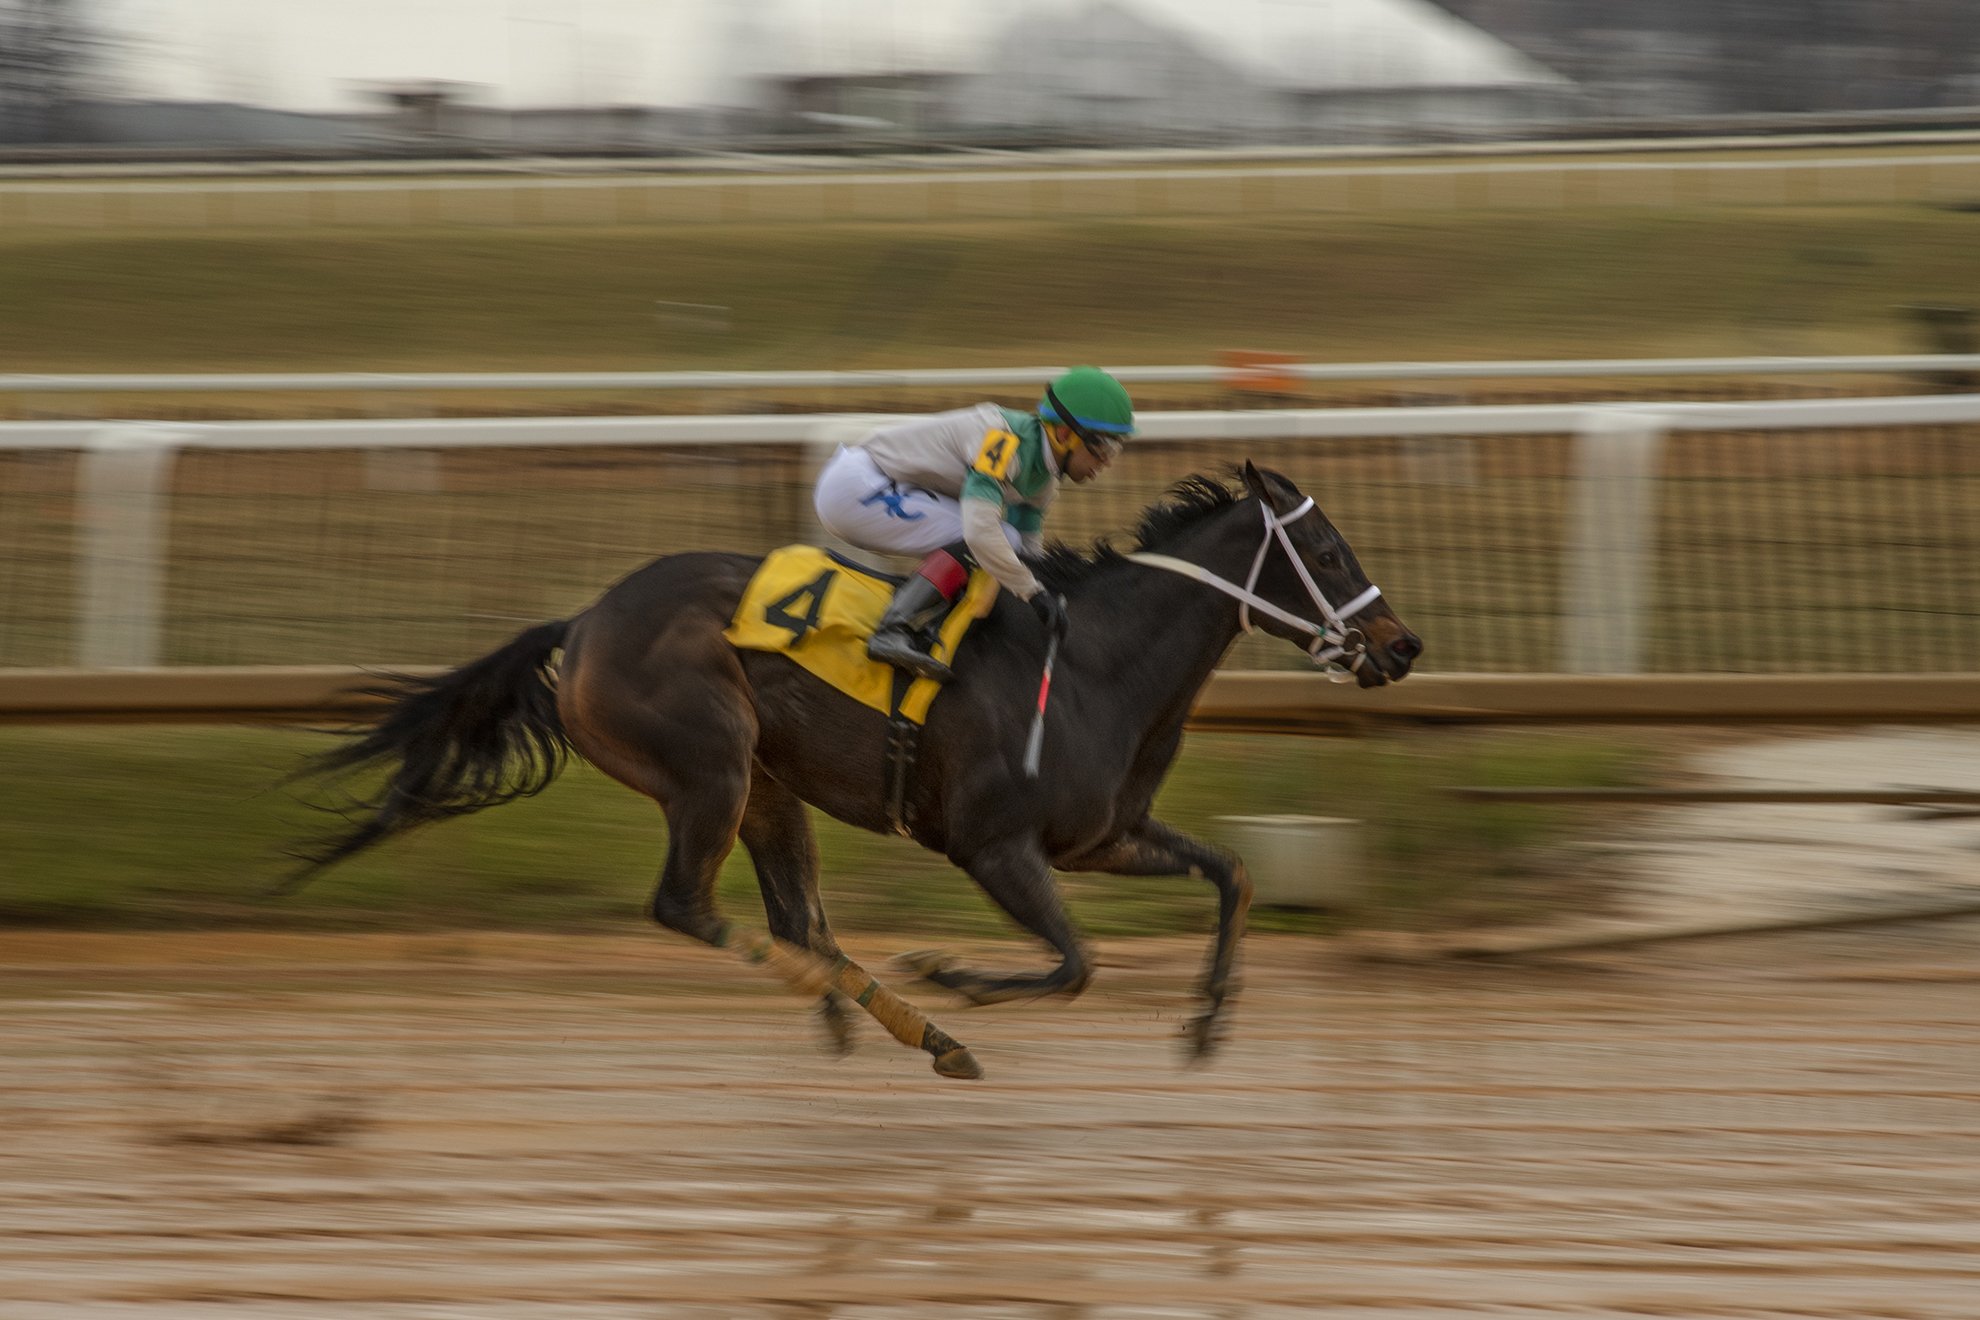 Photo © Albert Ewing-Horse In Flight-Color-Horse Racing-Laurel Park Stakes Day-WEBSITE_ALE2563.jpg